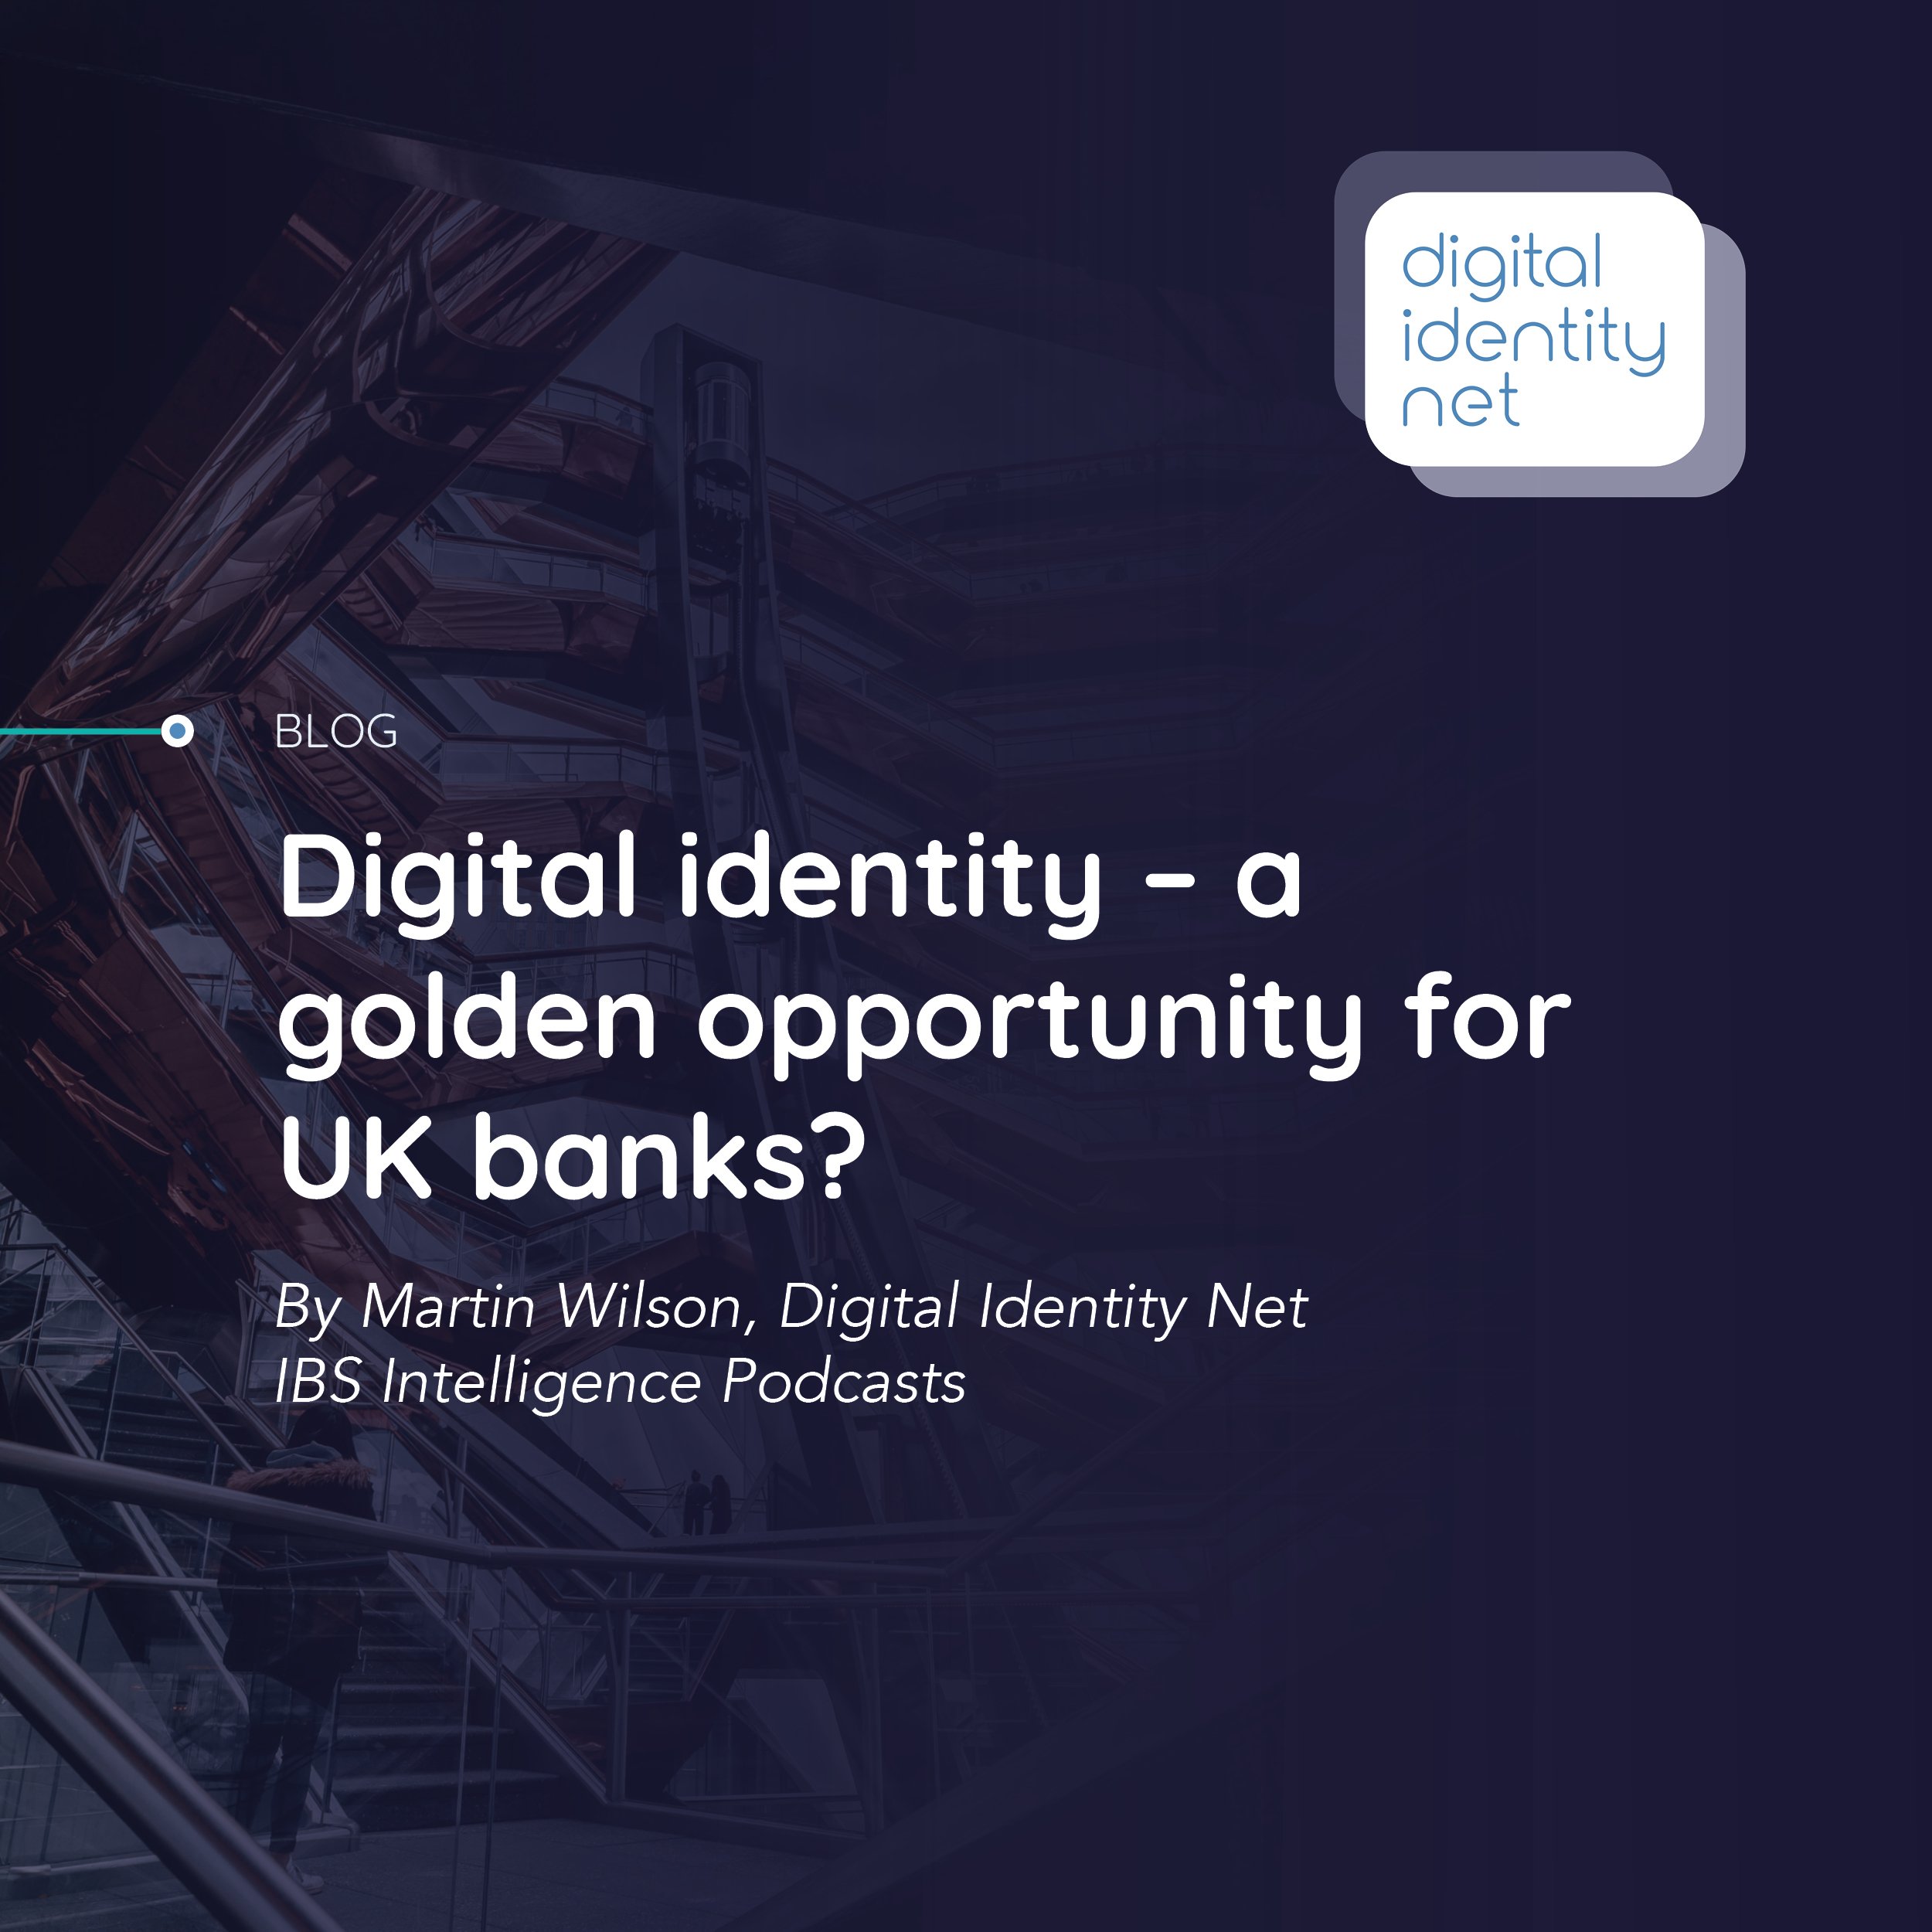 Digital Identity - a golden opportunity for banks? header image